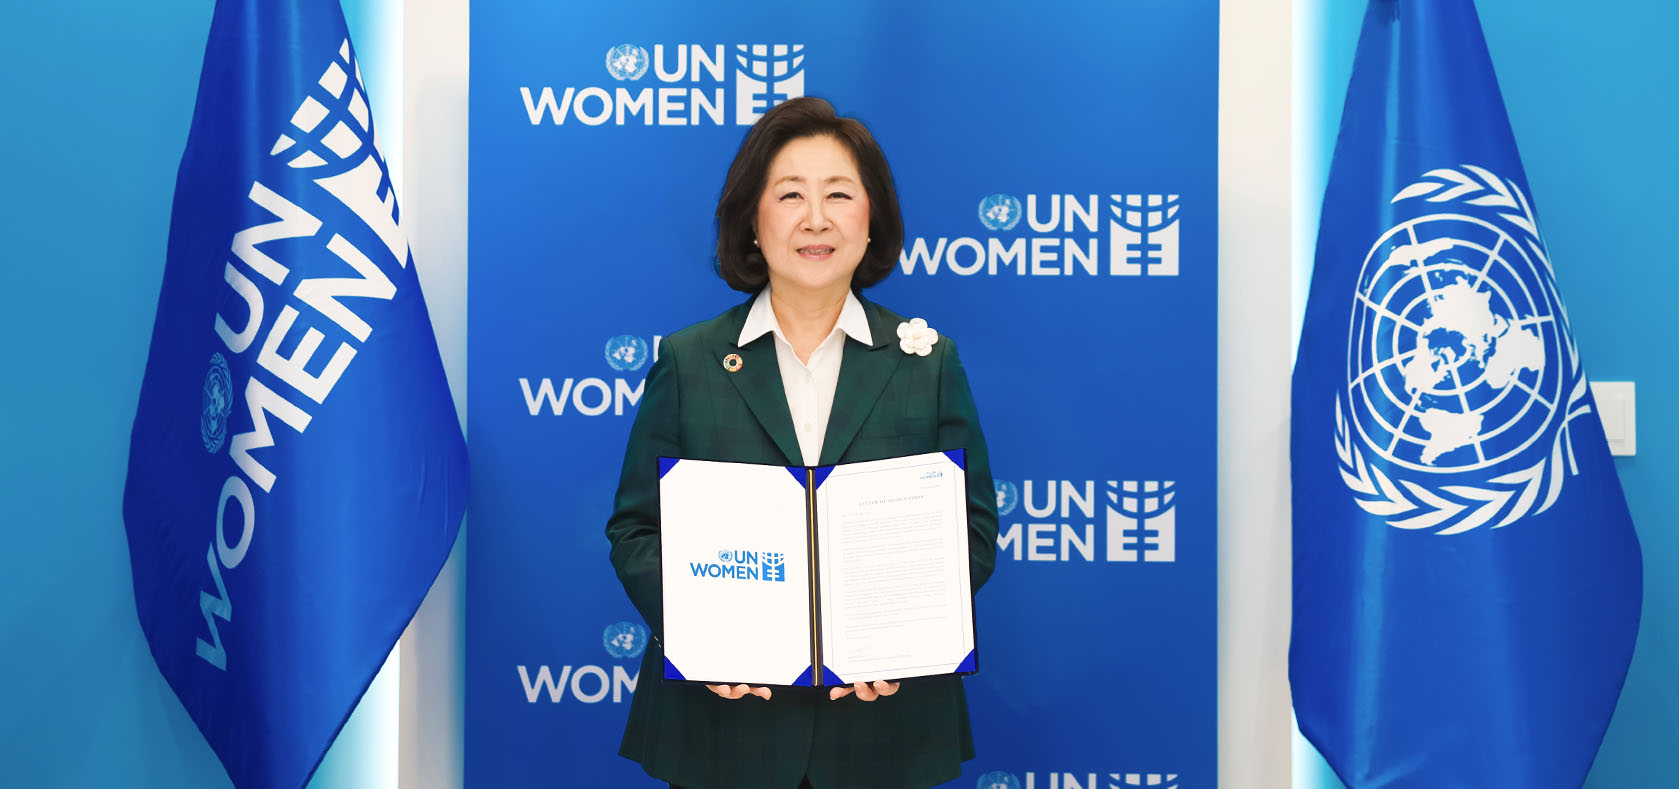 Eun Mee Kim, President of Ewha Womans University, holding the letter of designation as the UN Women National Goodwill Ambassador for the Republic of Korea. Photo: UN Women/Chanyoung Park